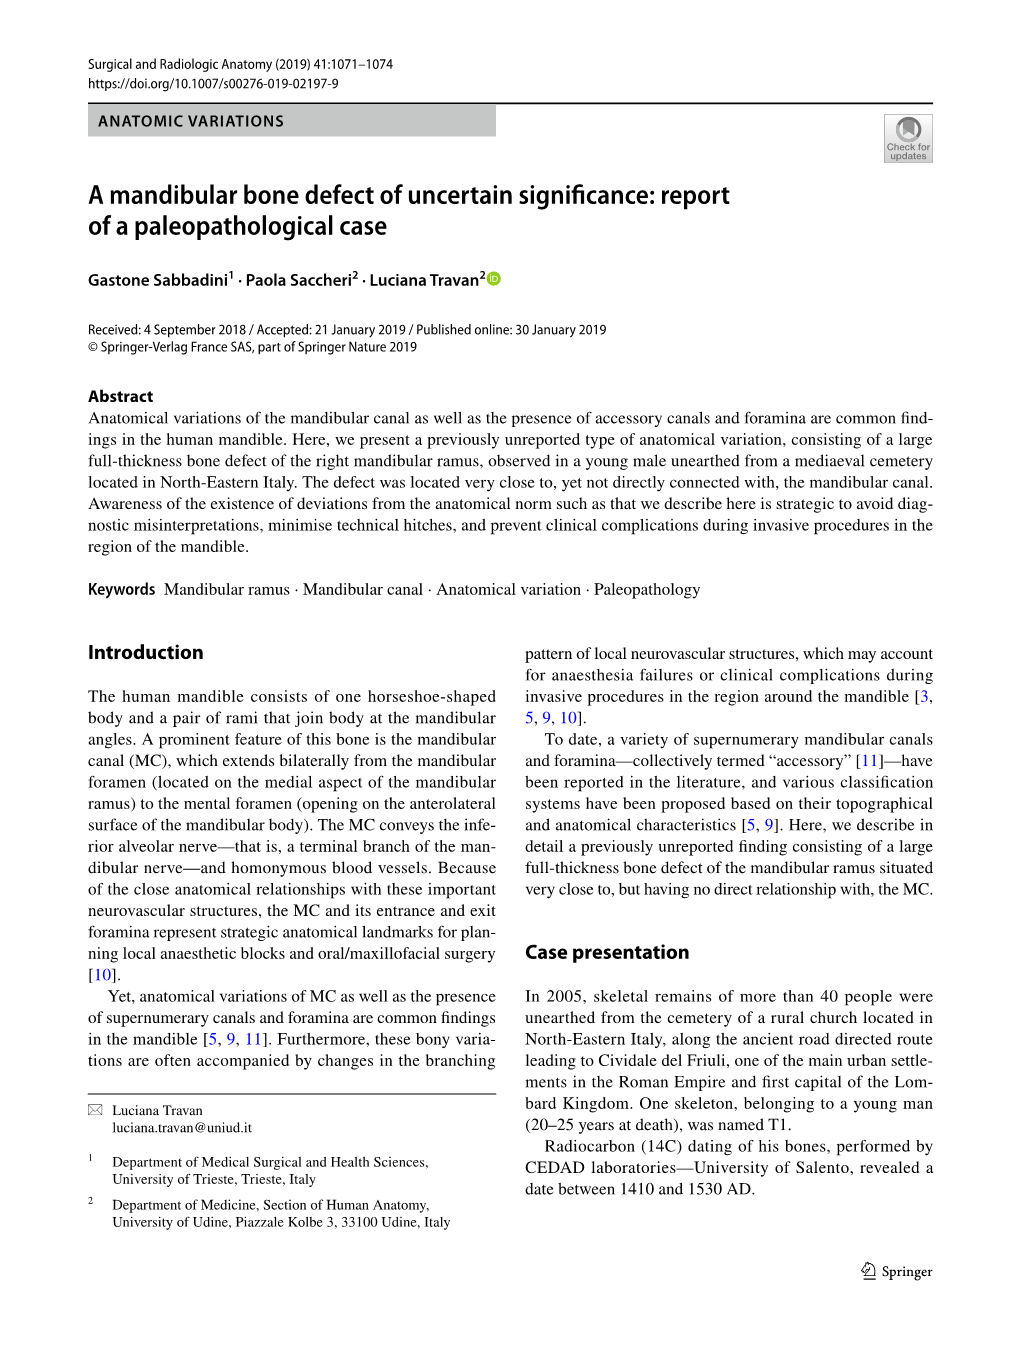 A Mandibular Bone Defect of Uncertain Significance: Report of a Paleopathological Case